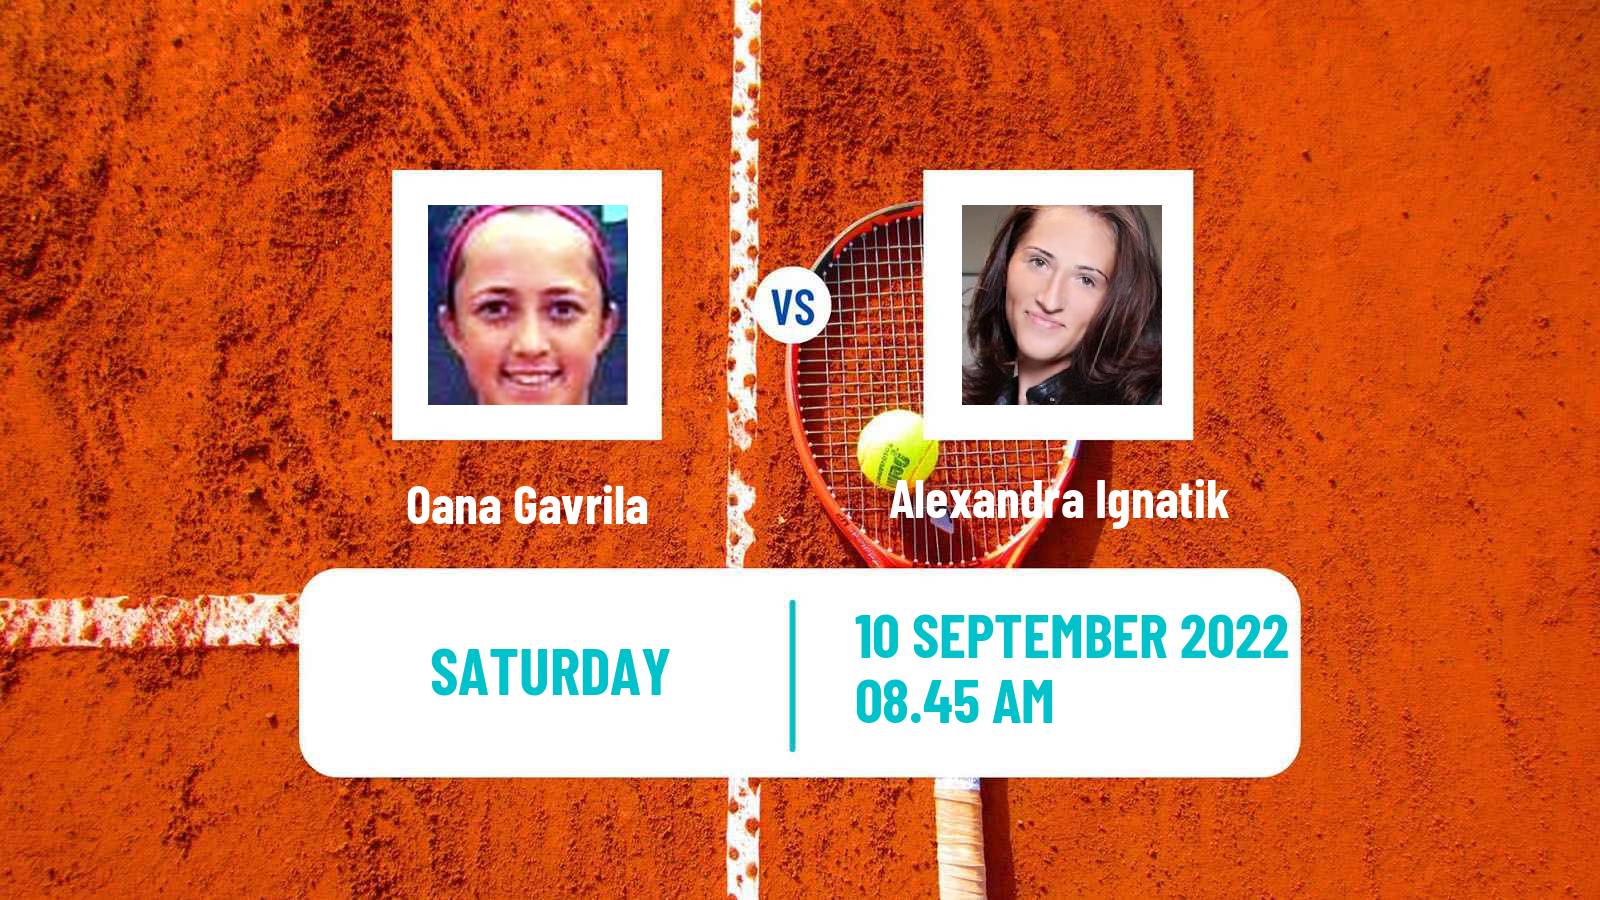 Tennis ATP Challenger Oana Gavrila - Alexandra Ignatik